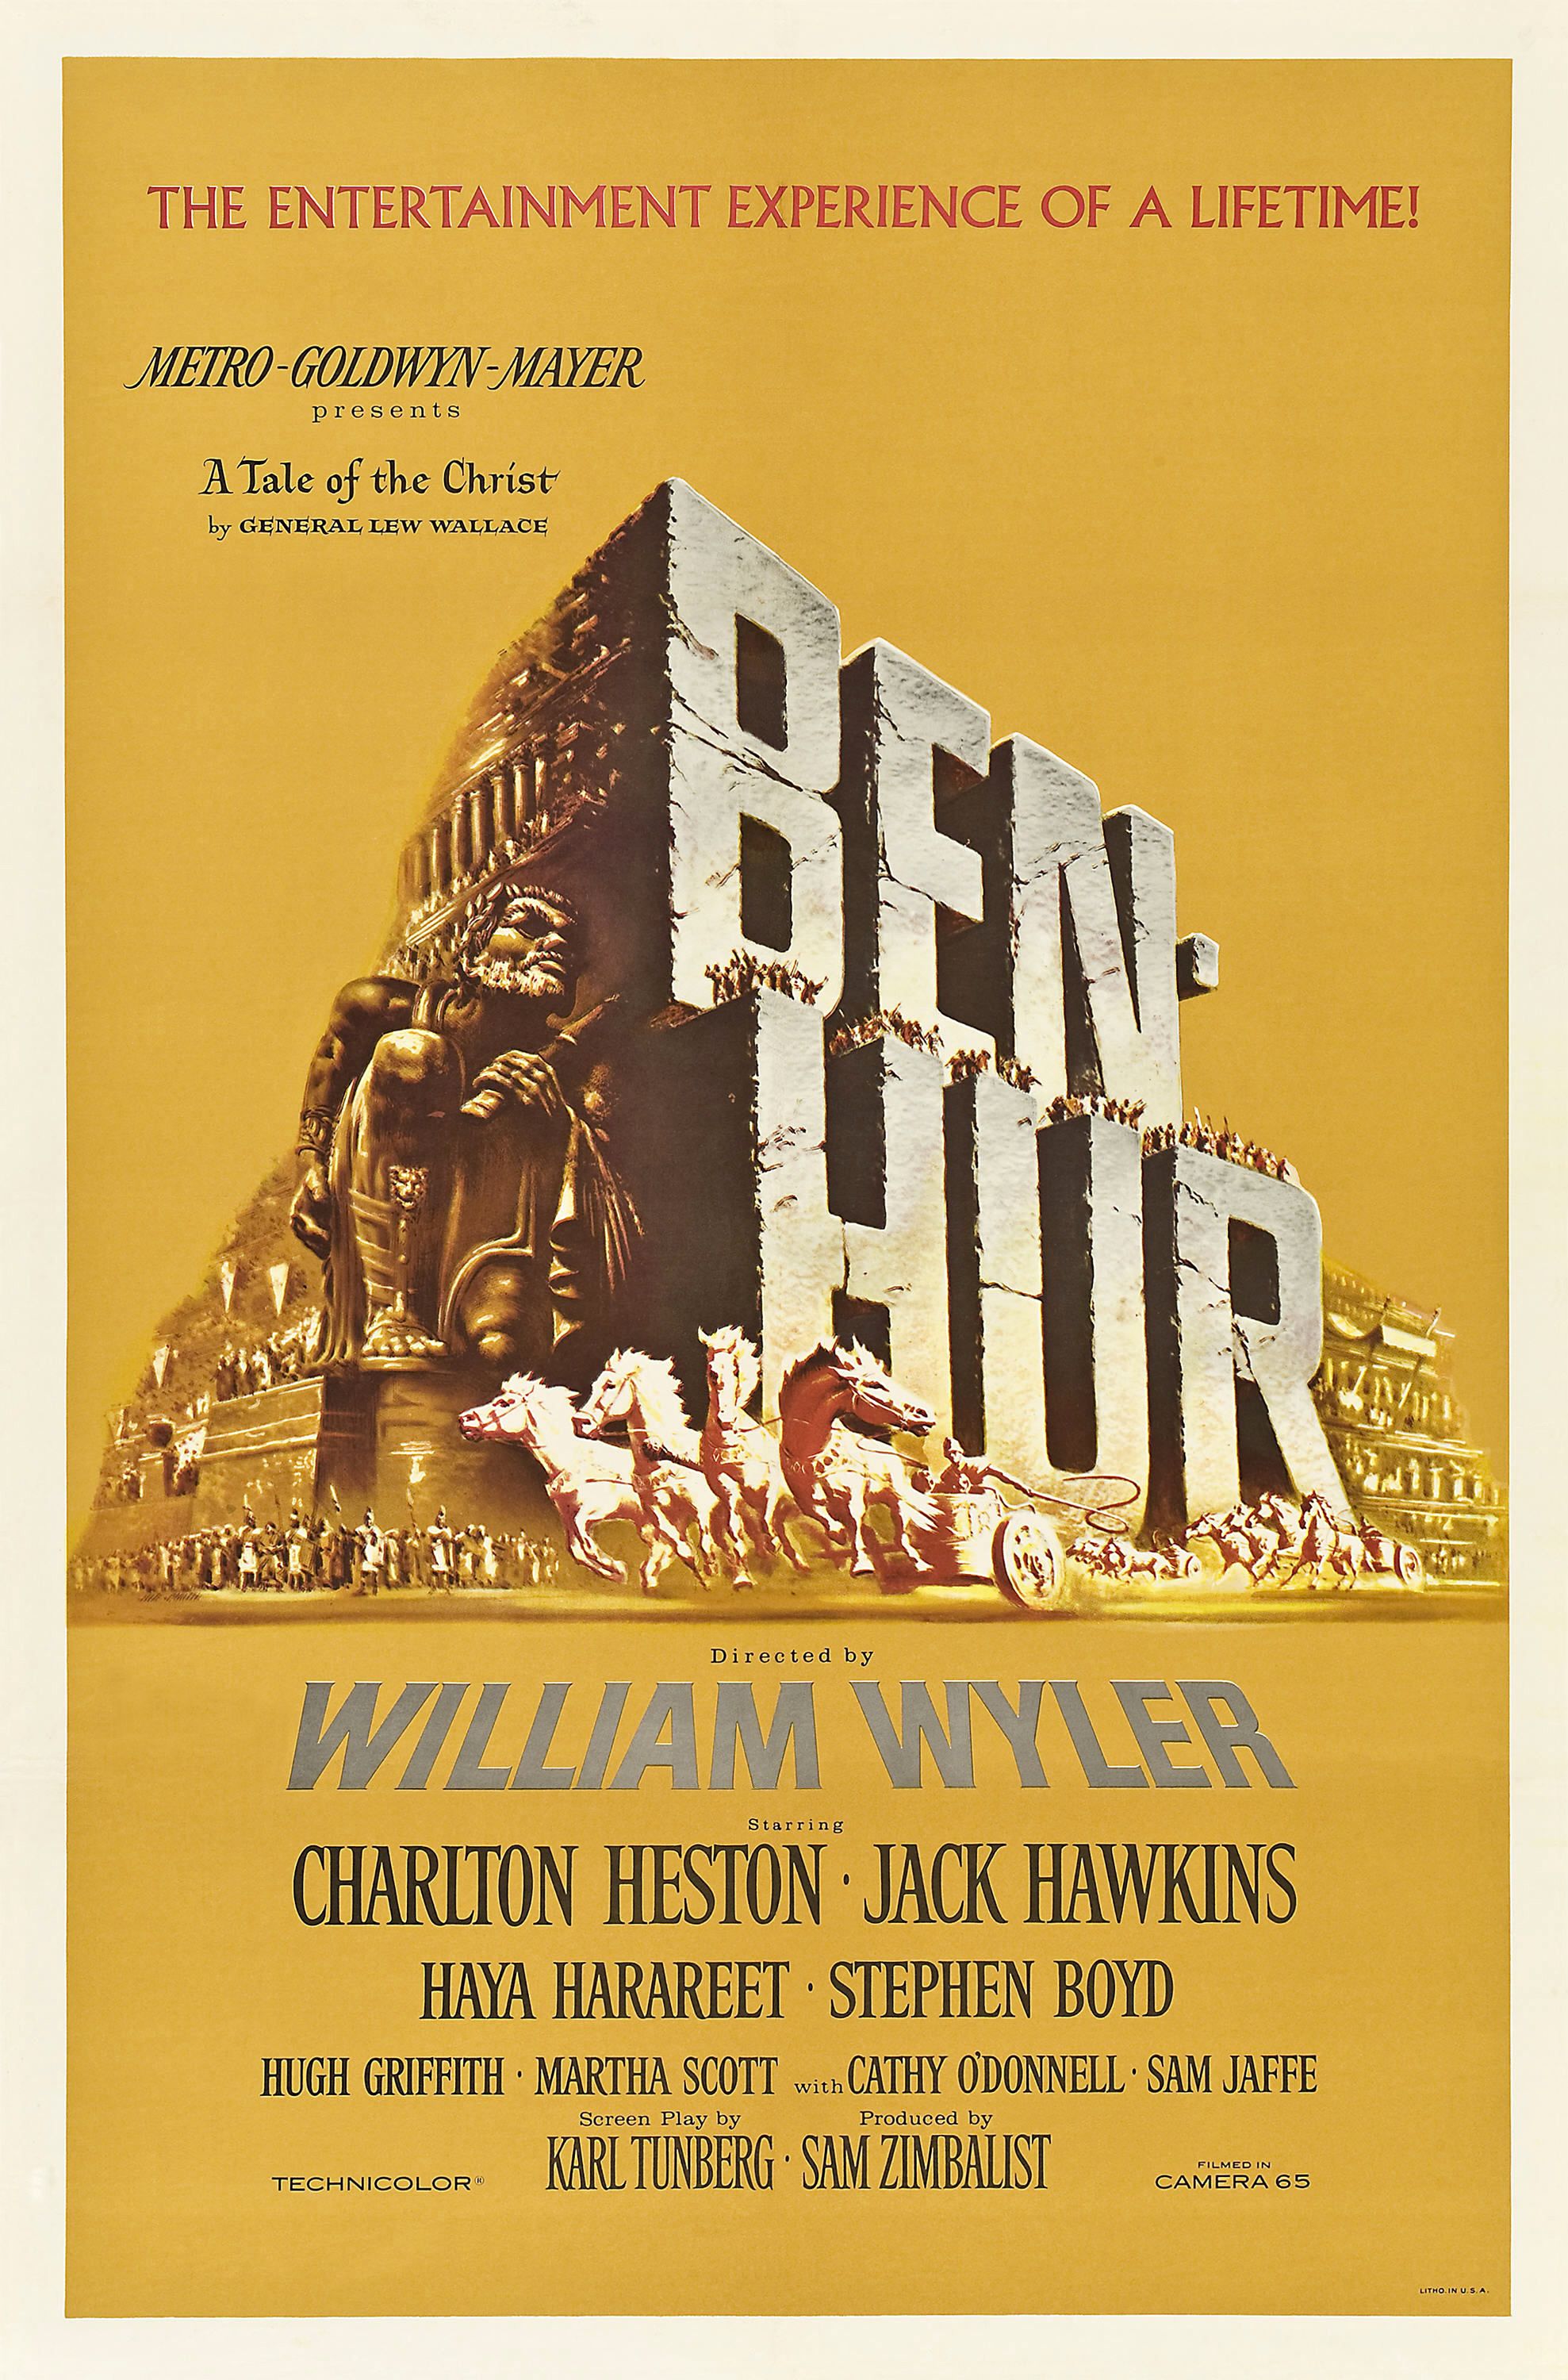 Affiche du film Ben-Hur